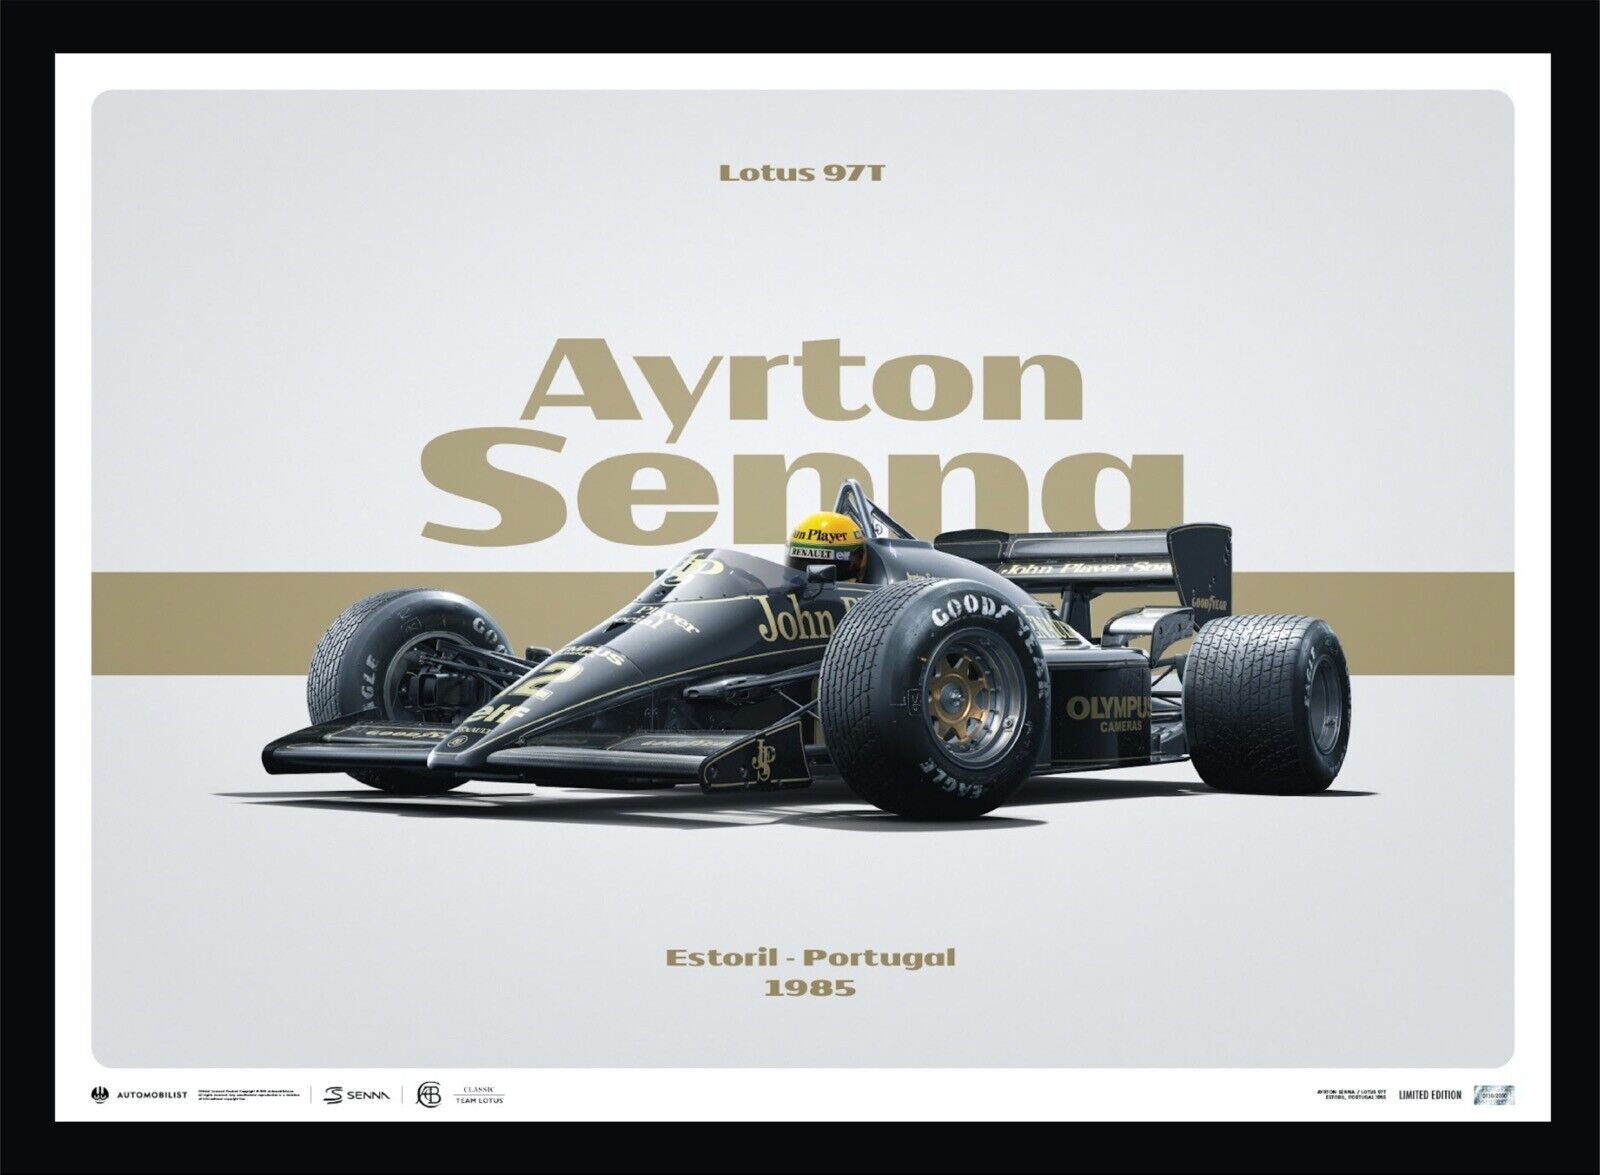 AYRTON SENNA Lotus 97T John Player Special 1985 Estoril Grand Prix LtdEd Poster